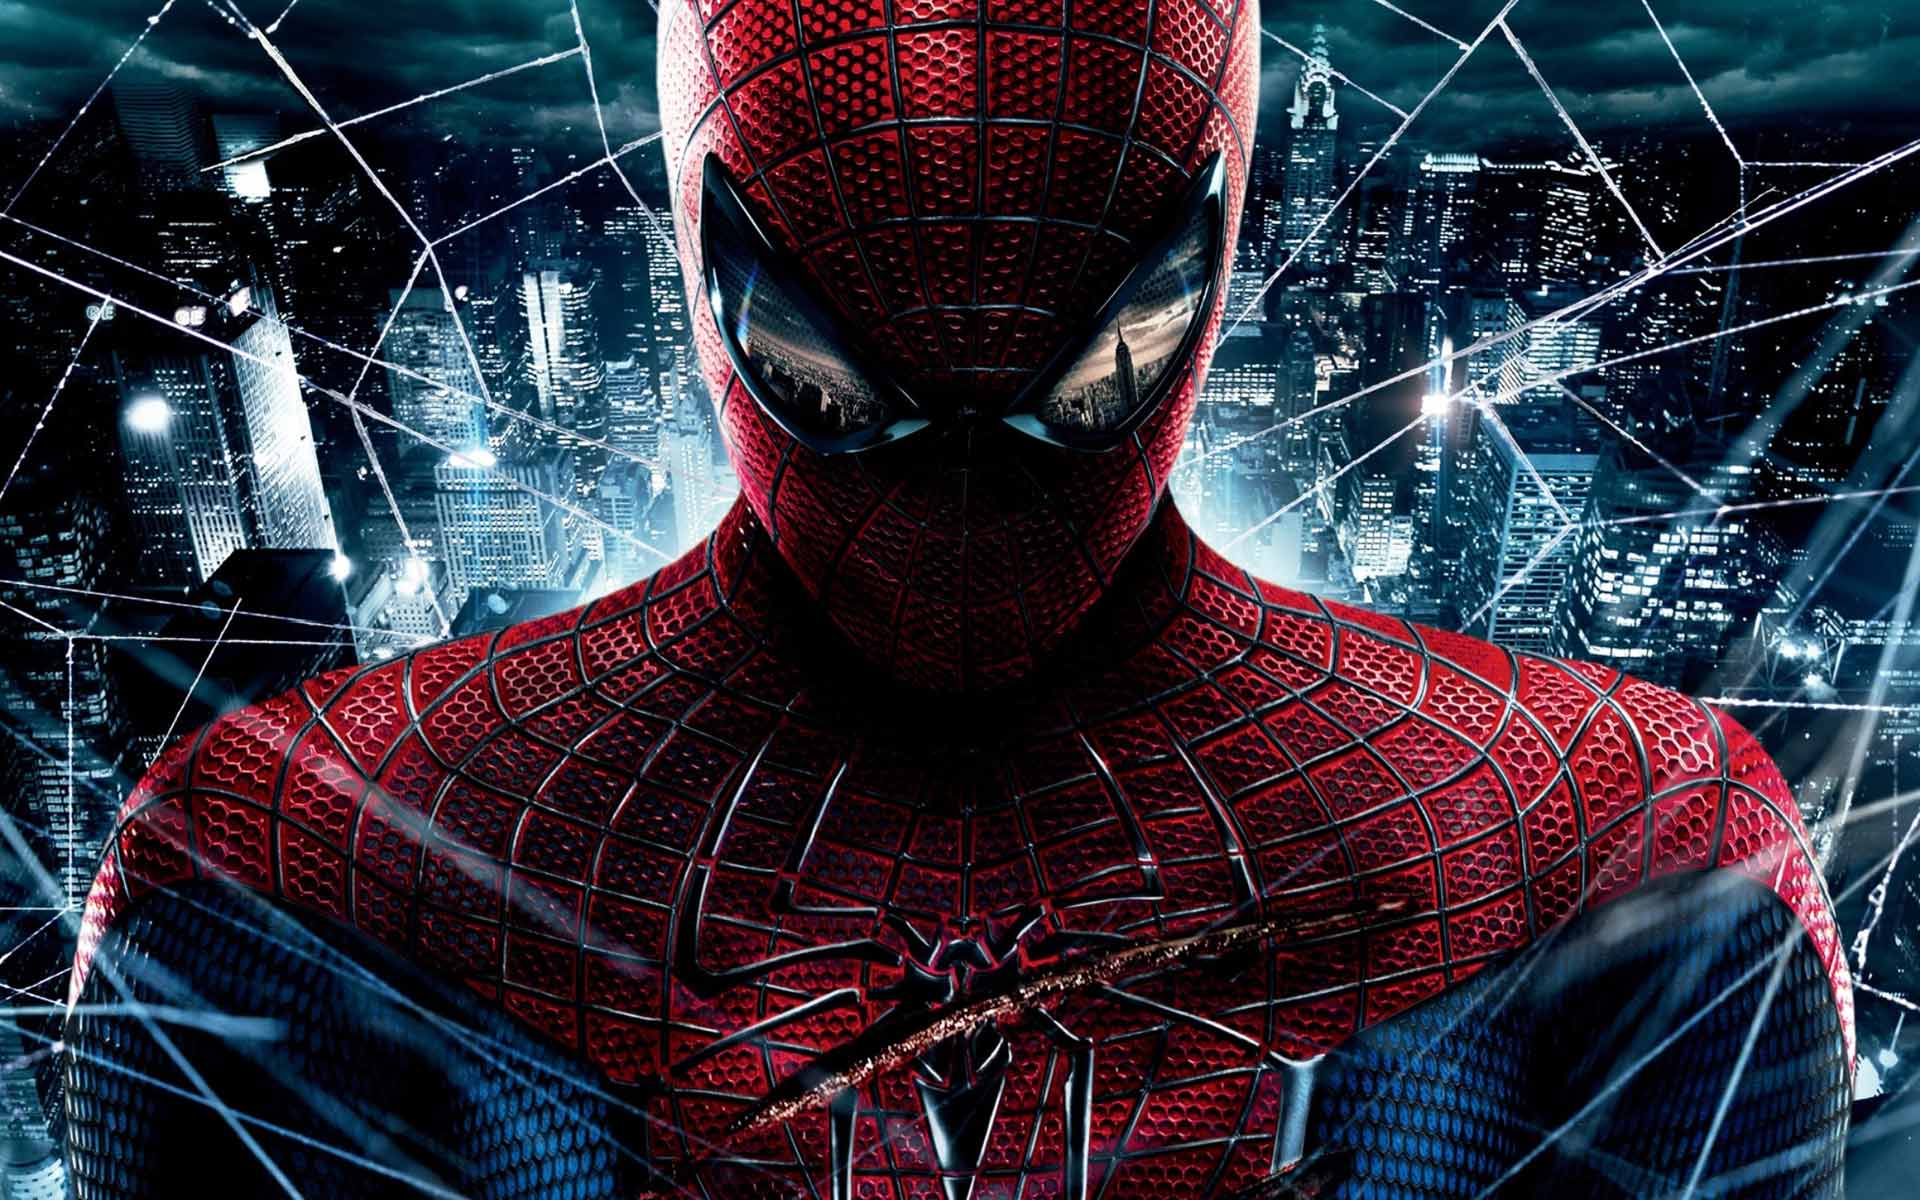 Locandina di The Amazing Spider-Man - Photo Credits: Nerd Planet